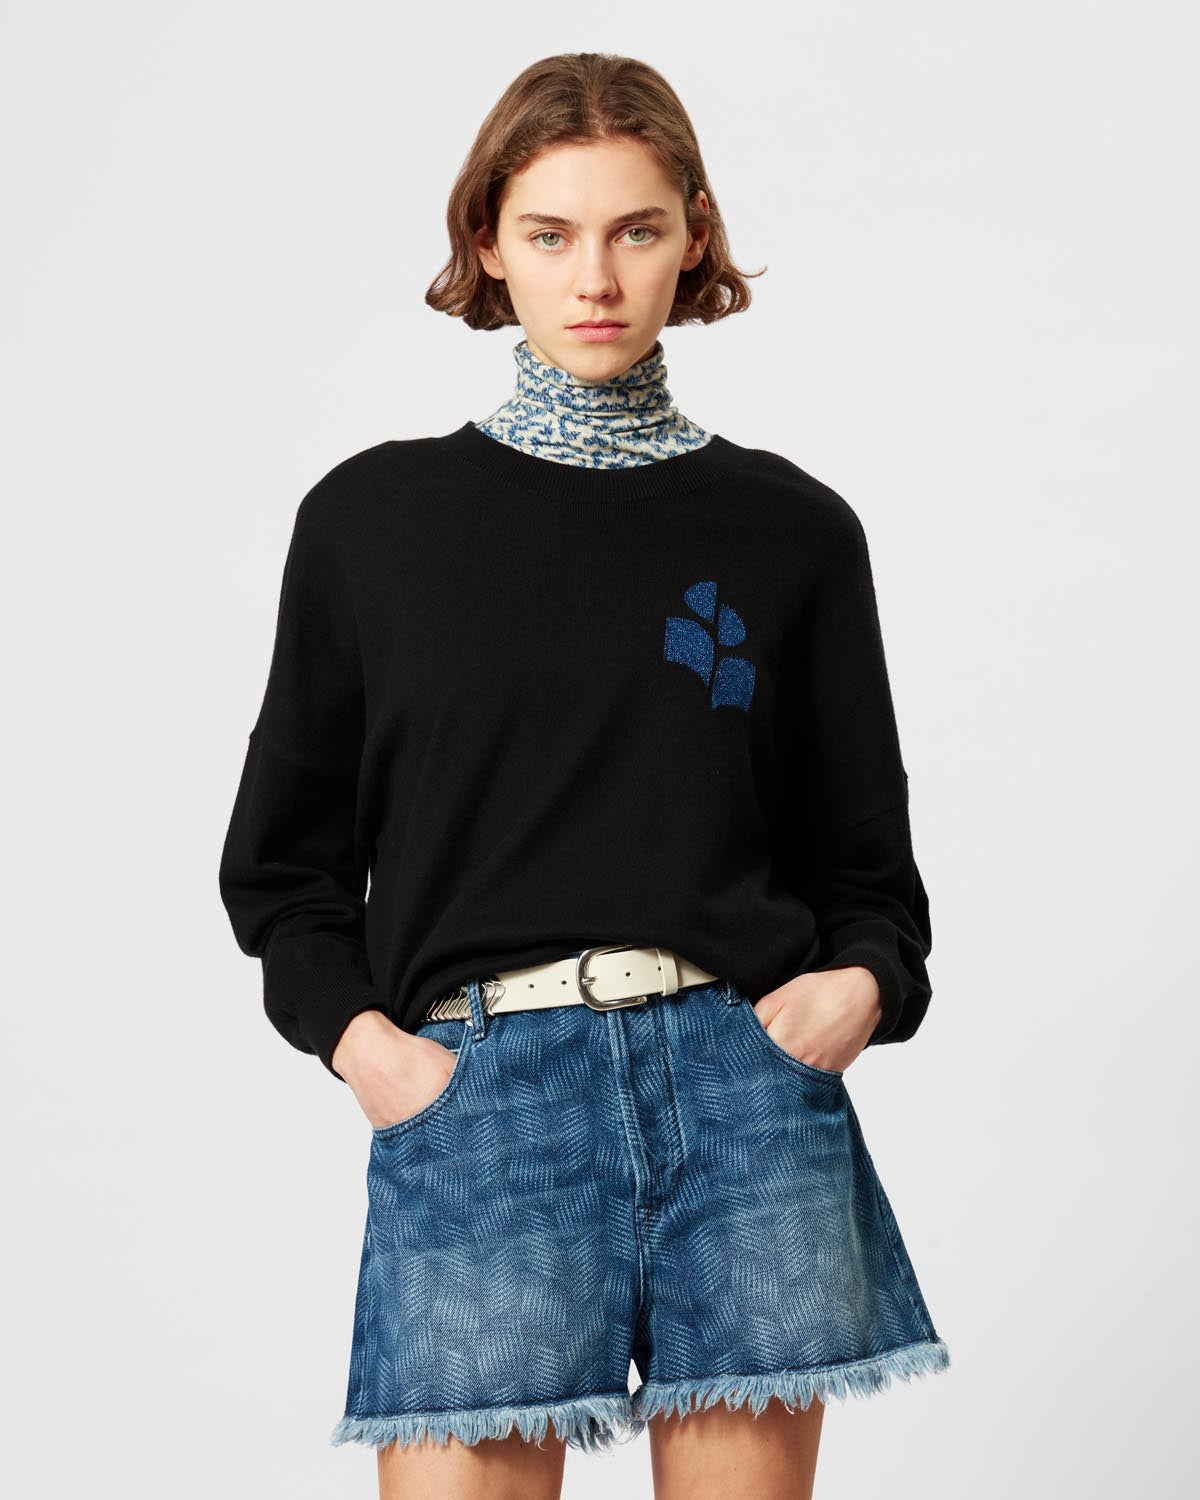 Marisans sweater Woman Black-blue 4